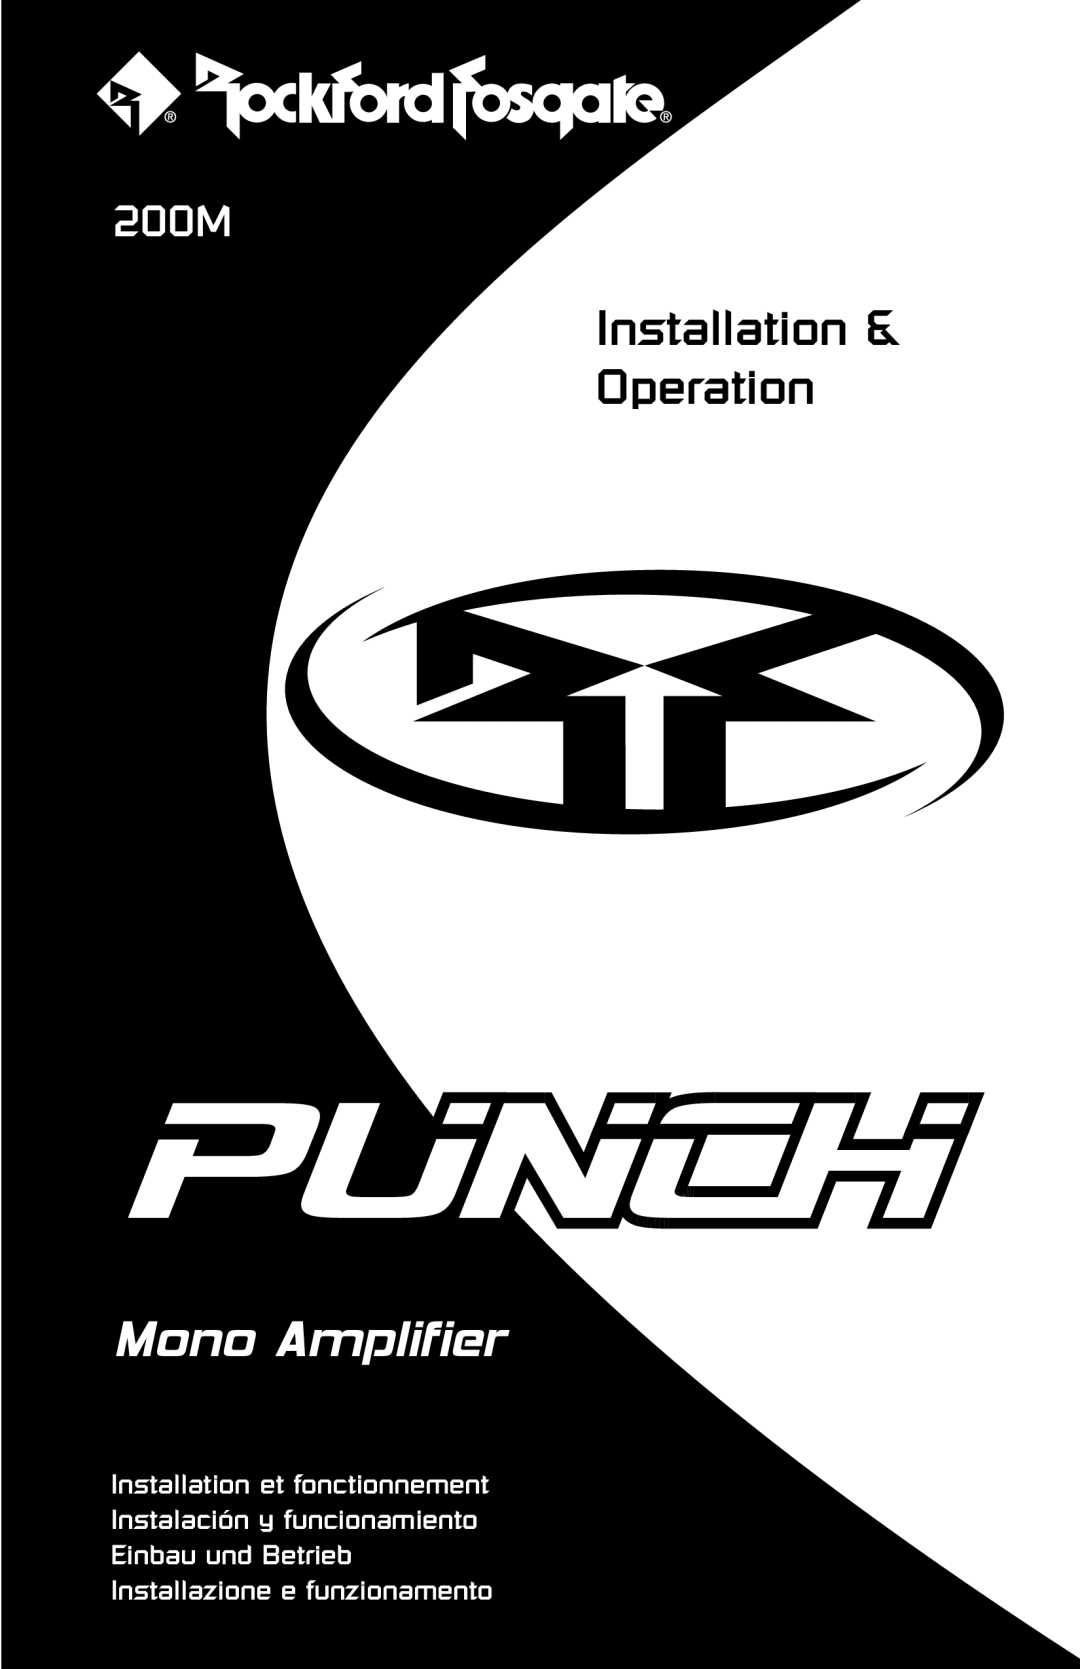 Rockford Fosgate Mono Amplifier manual Installation & Operation, 200M, Installation et fonctionnement 